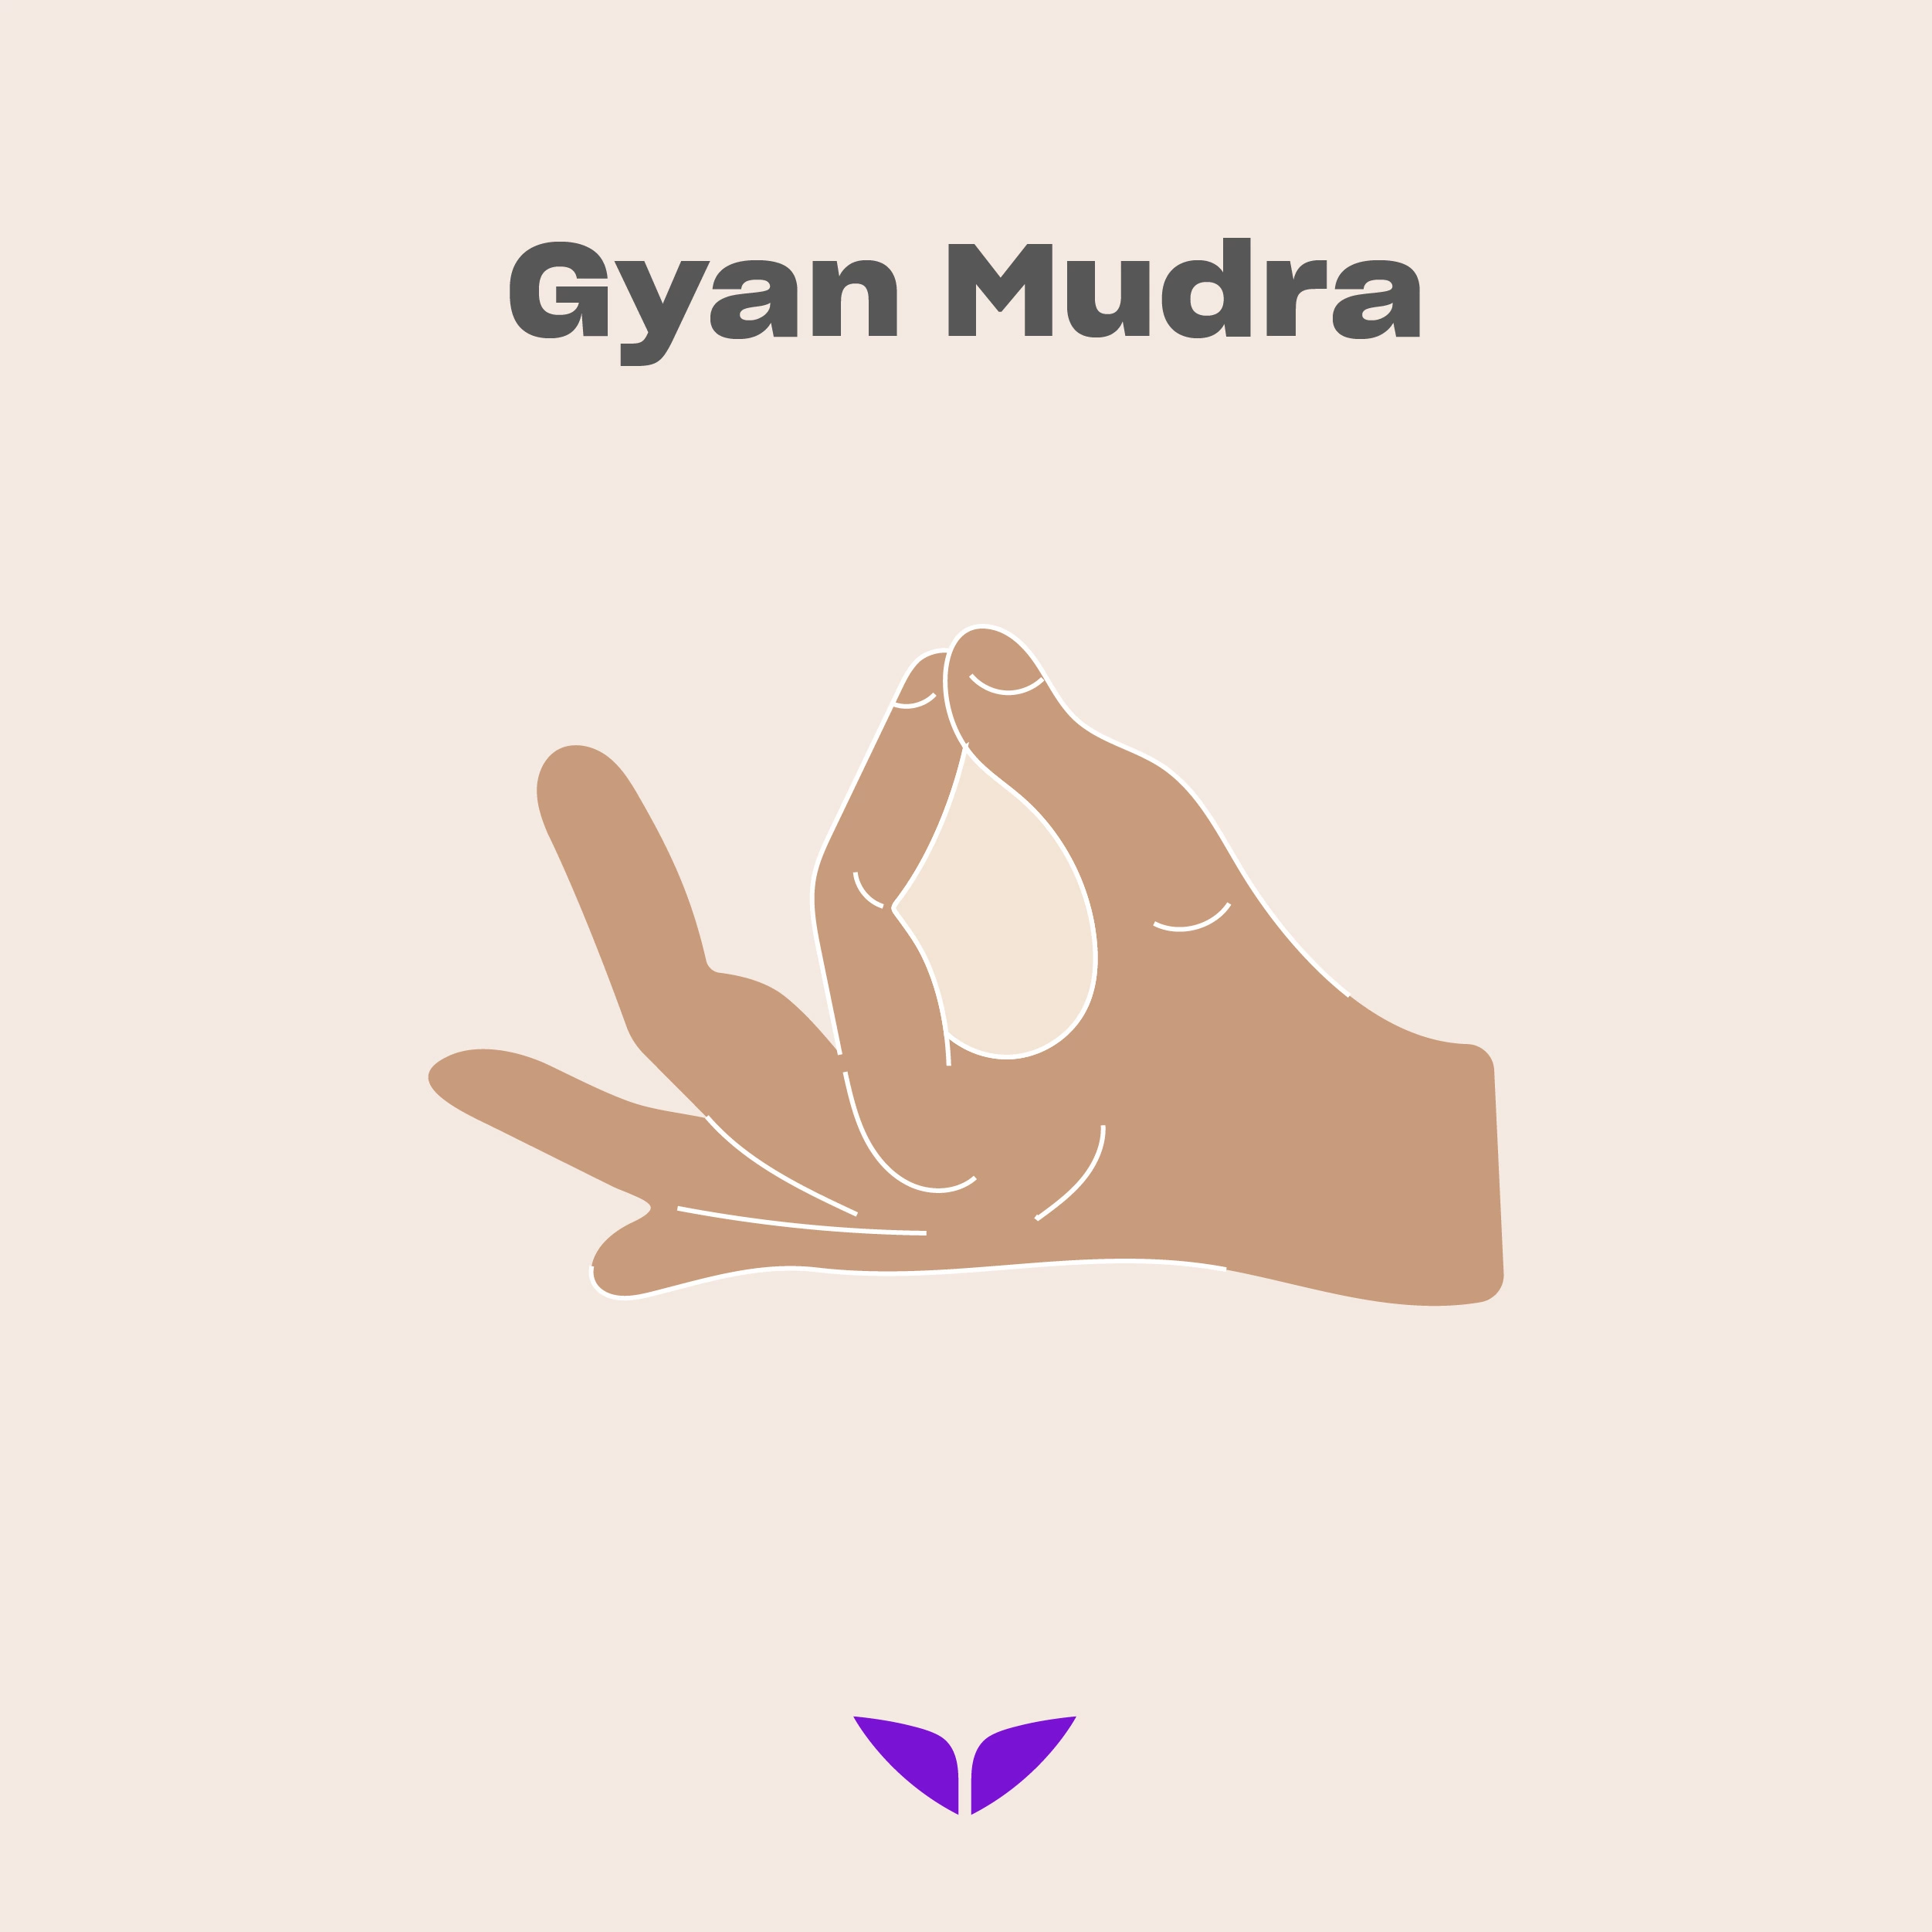 The Gyan mudra: seal of knowledge